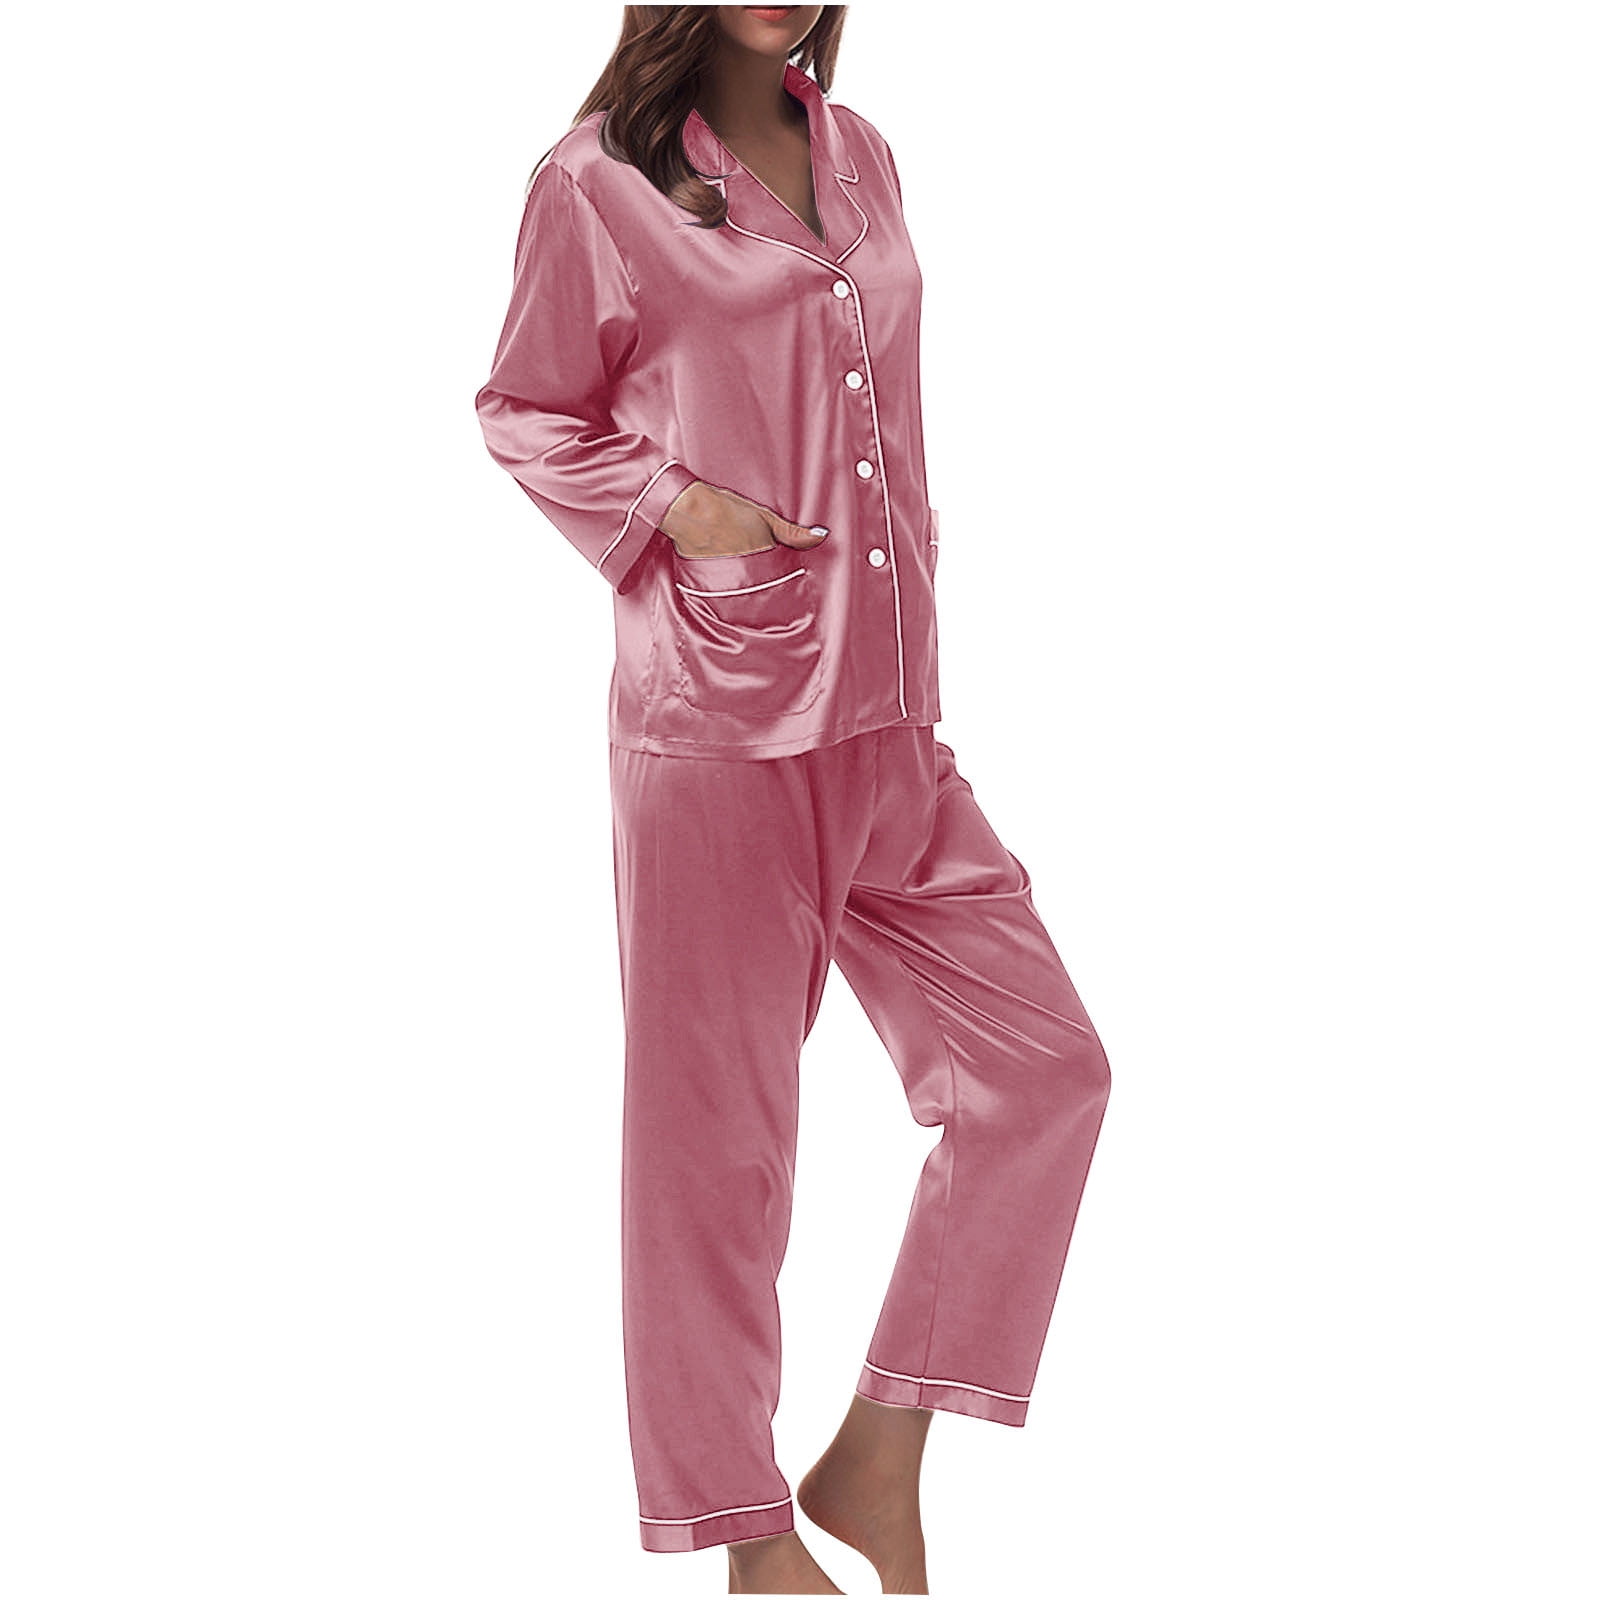 BLVB Satin Pajamas Set Women's Long Sleeve Sleepwear Button Down Loungewear  Nightwear Silk Pjs with Pockets Hot Pink 